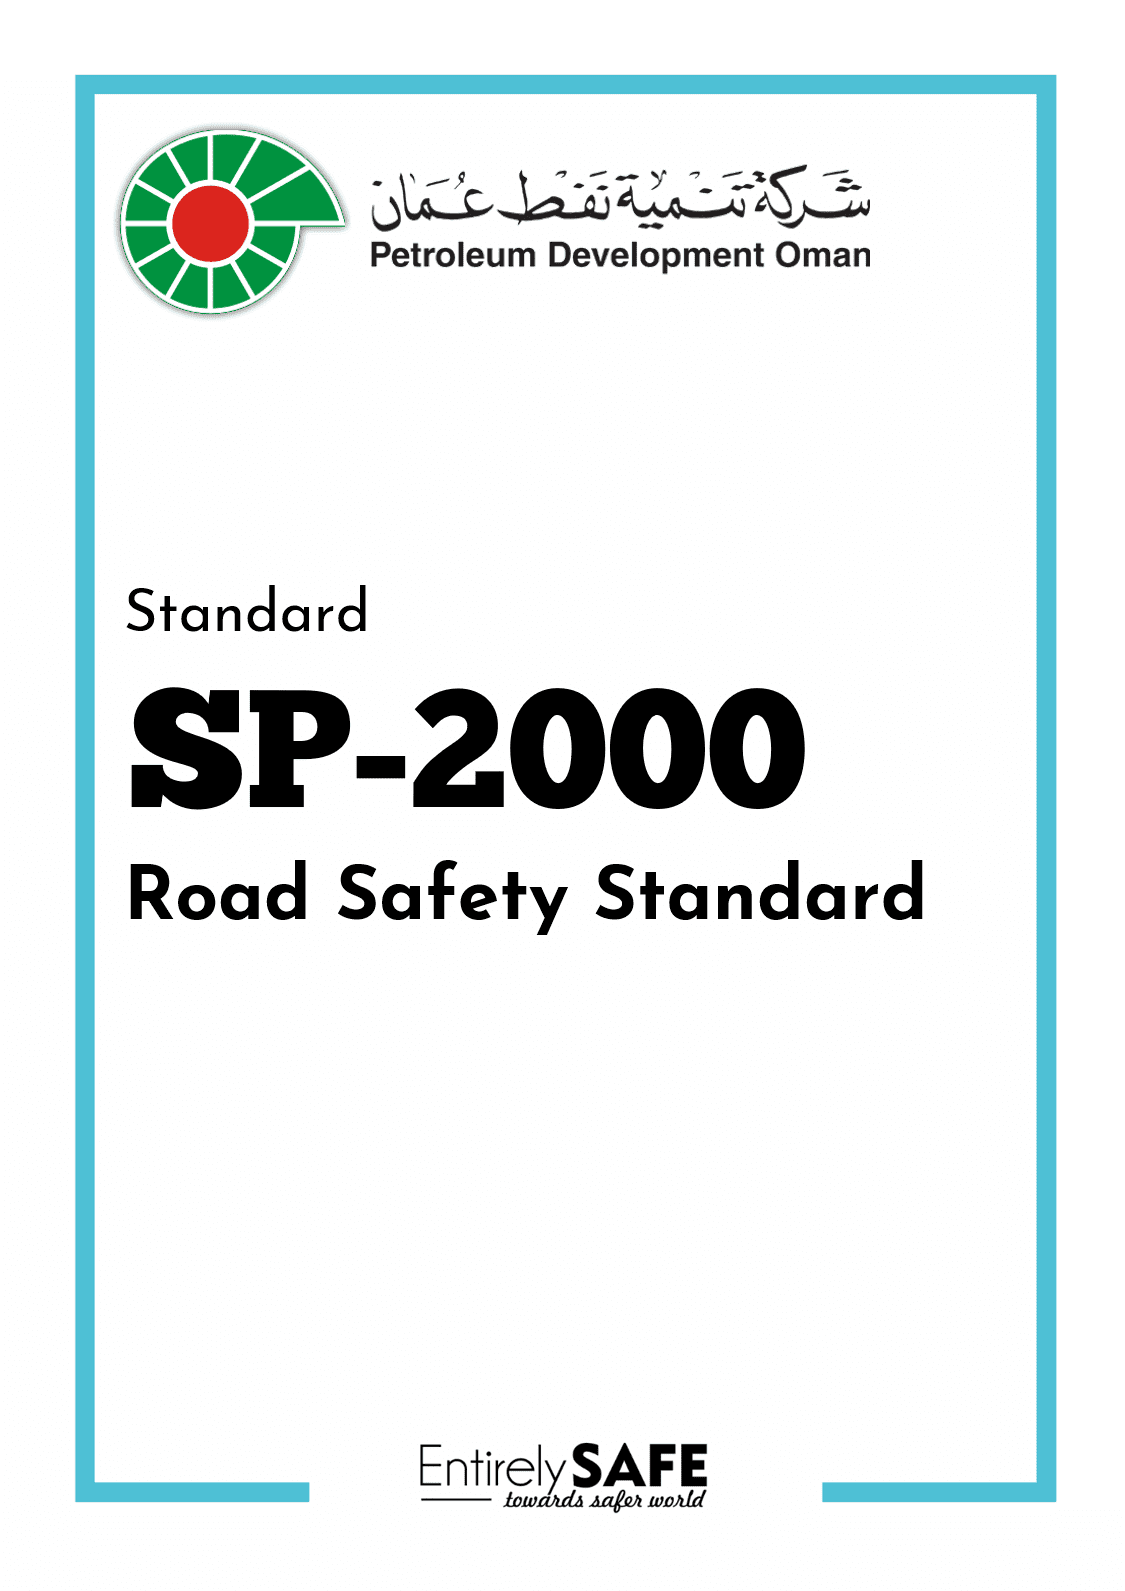 253-SP-2000-Road-Safety-Standard-PDO-download-pdf